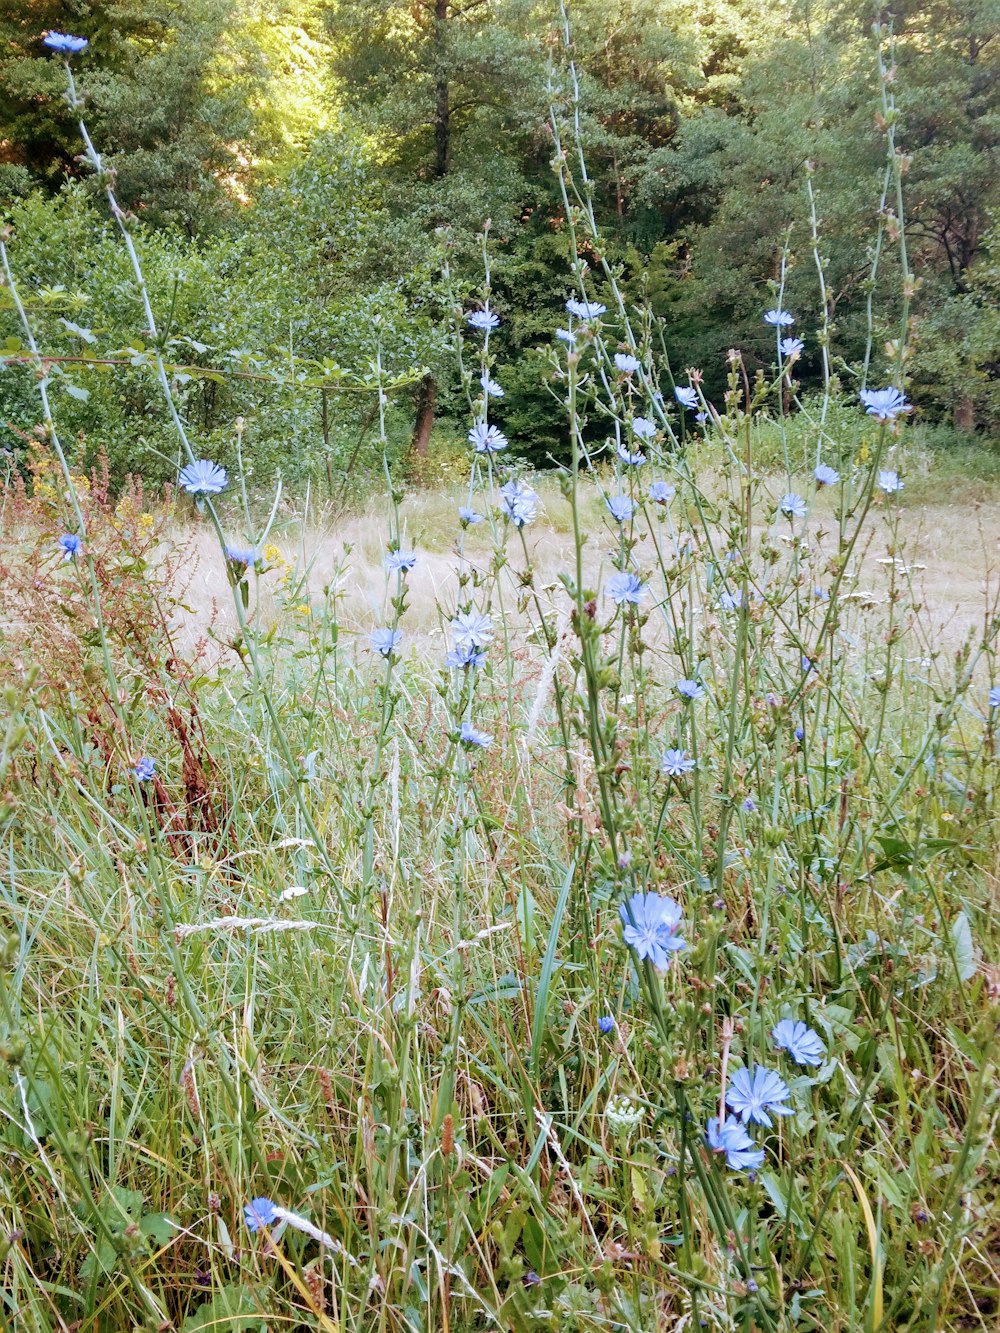 a bunch of blue flowers growing in a field